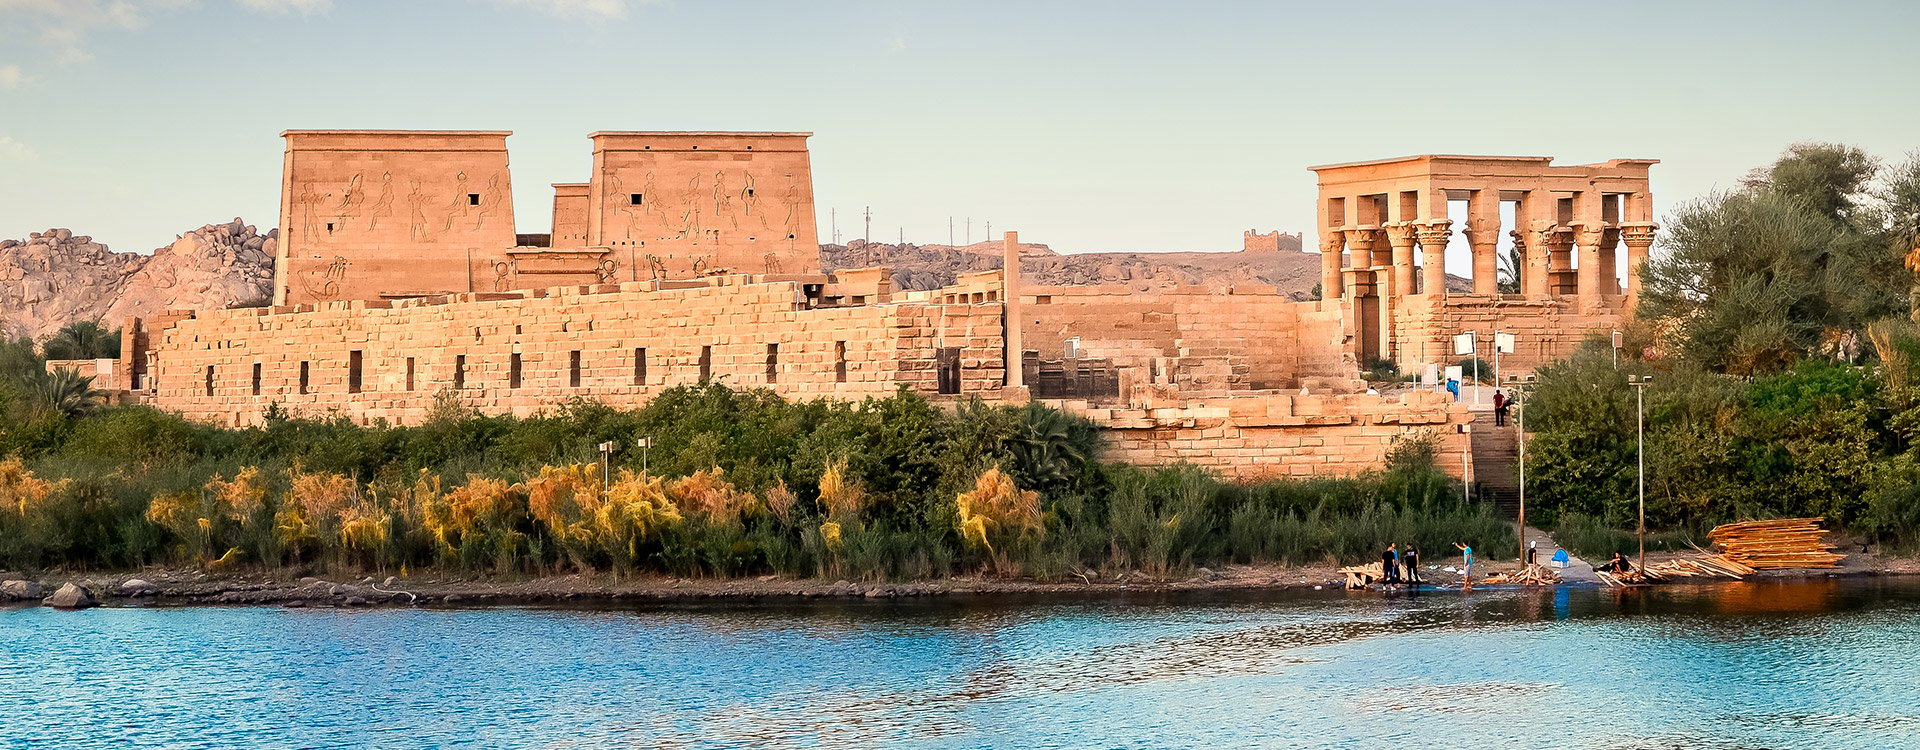 Aswan_Philae Temple